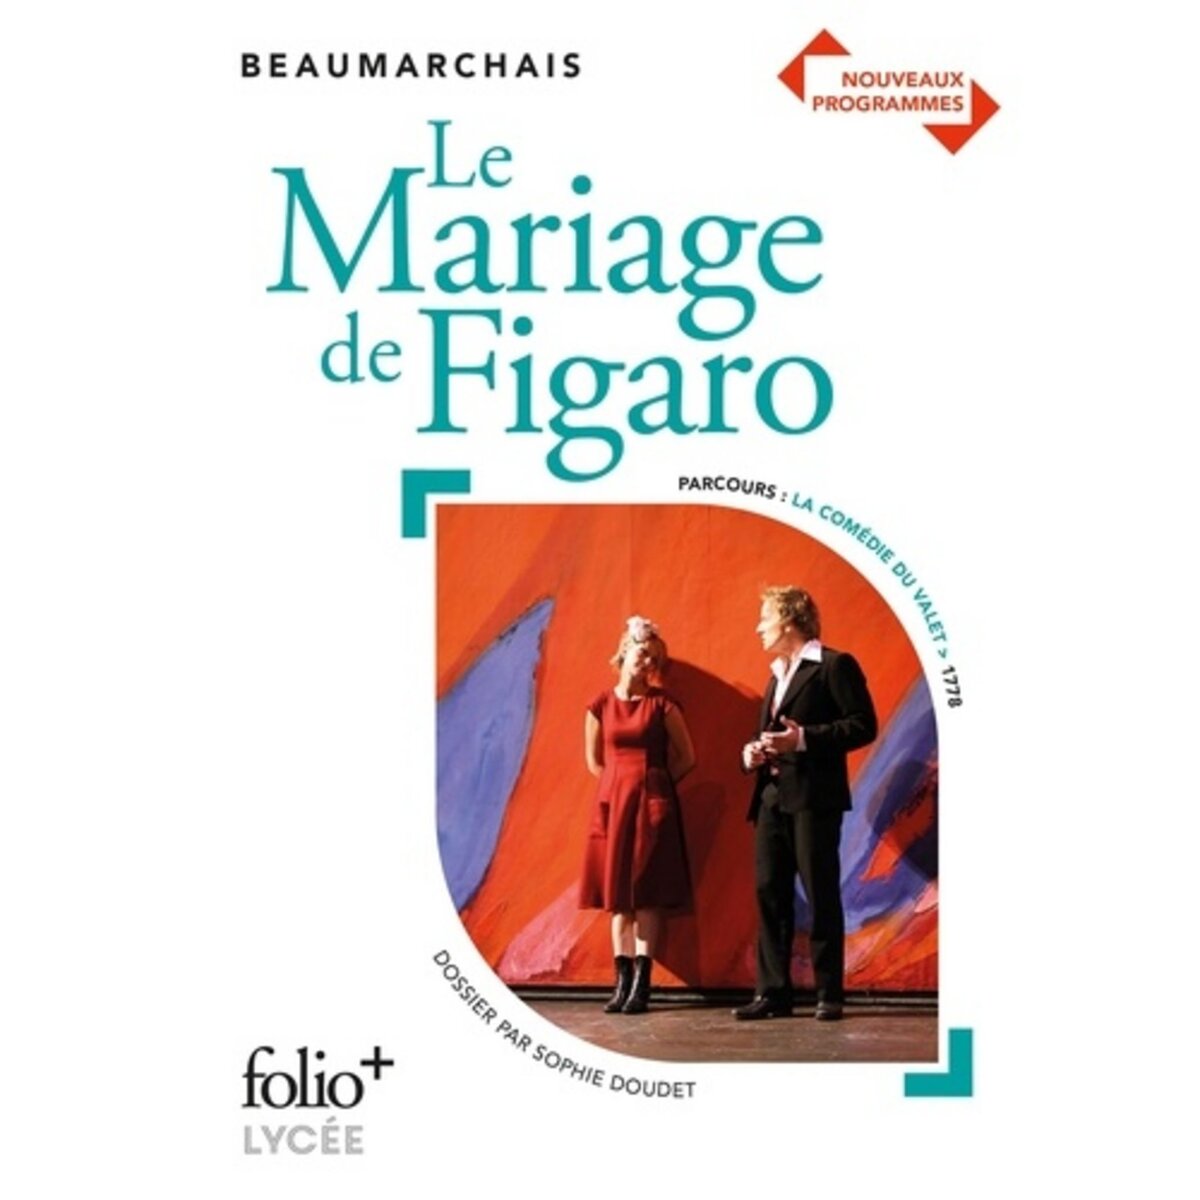  LE MARIAGE DE FIGARO, Beaumarchais Pierre-Augustin Caron de